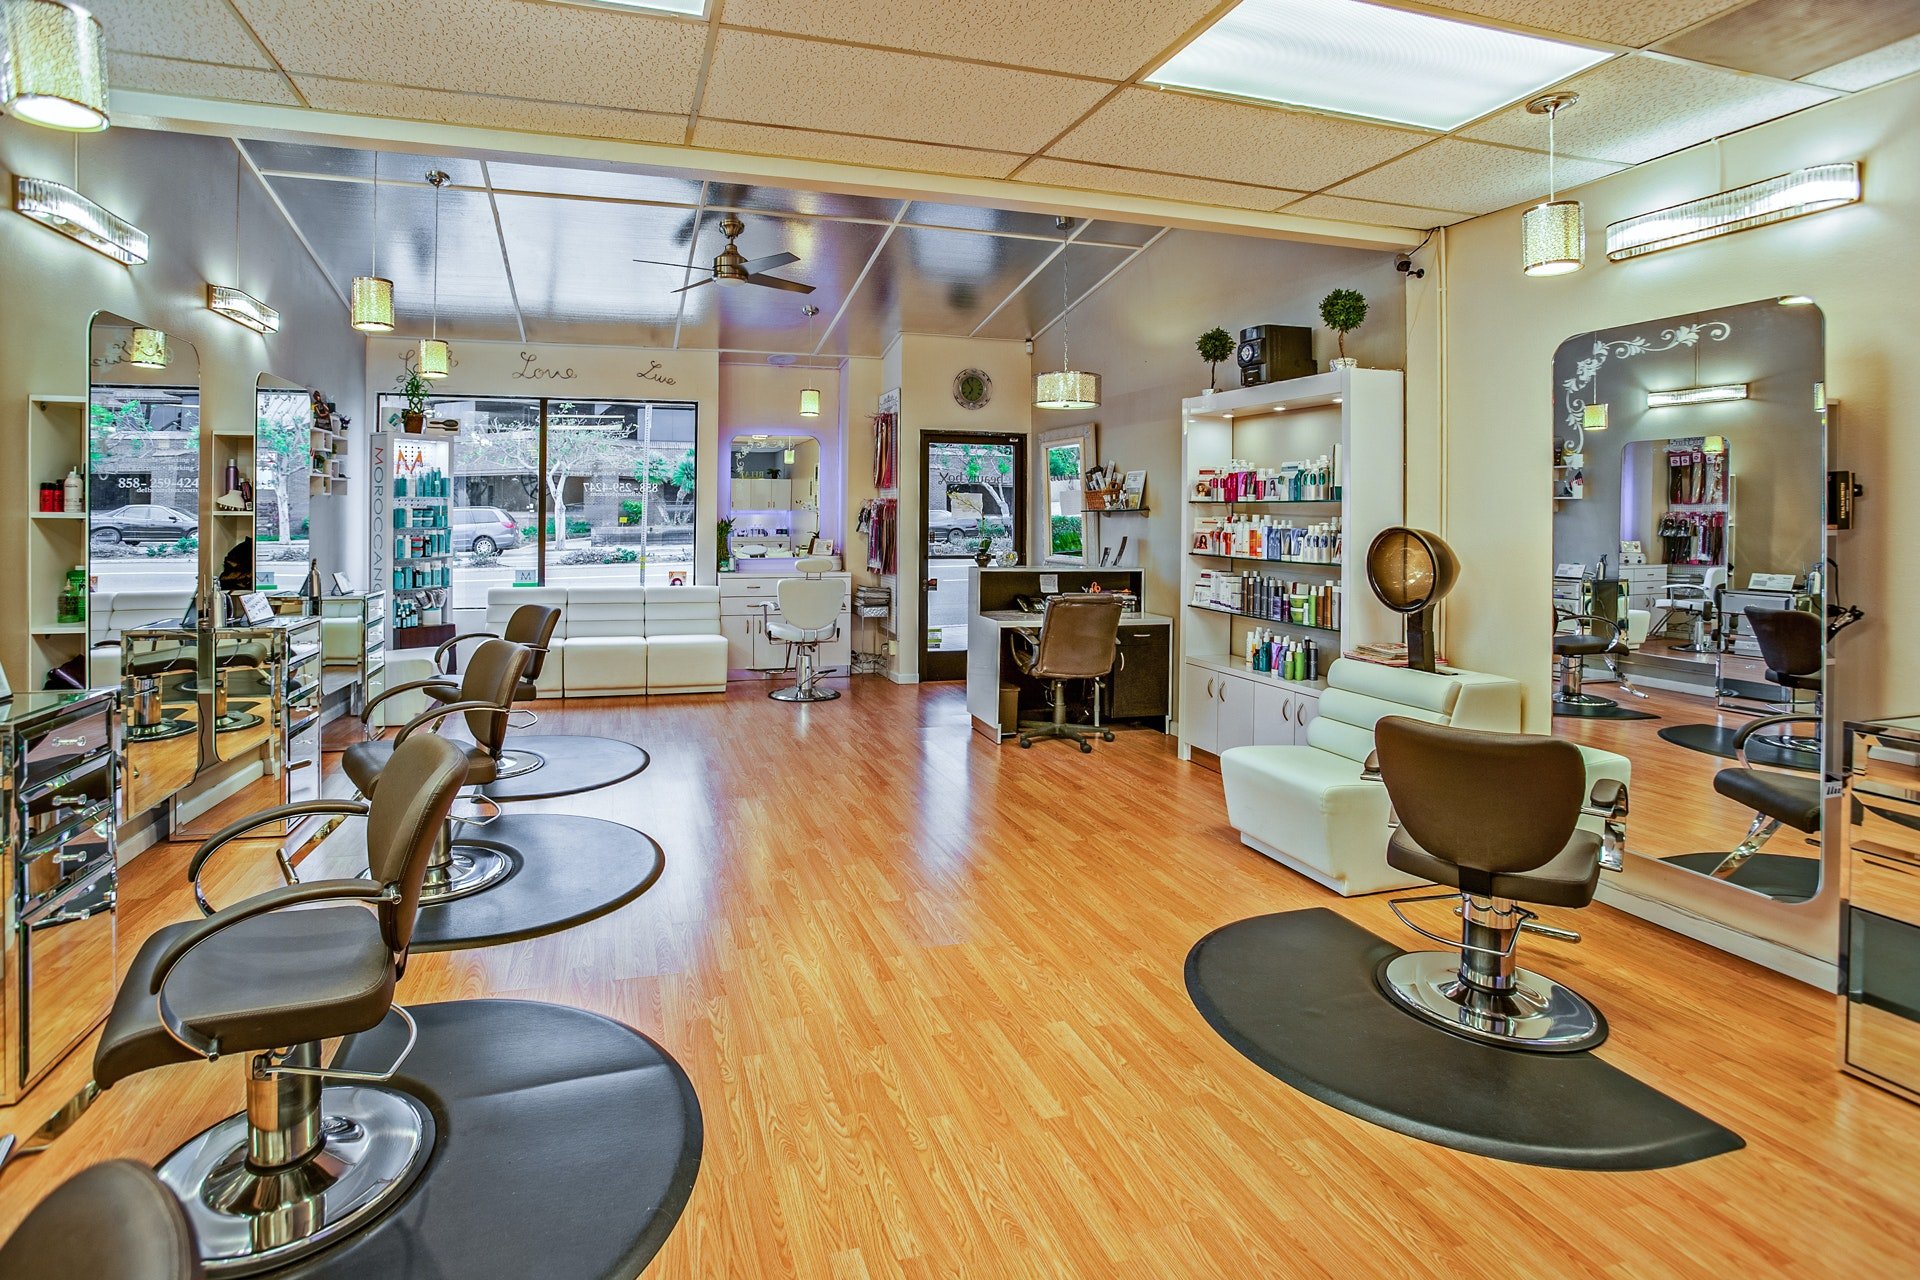 Mrs. Carter's salon was way better than Beth's | Photo: Pexels